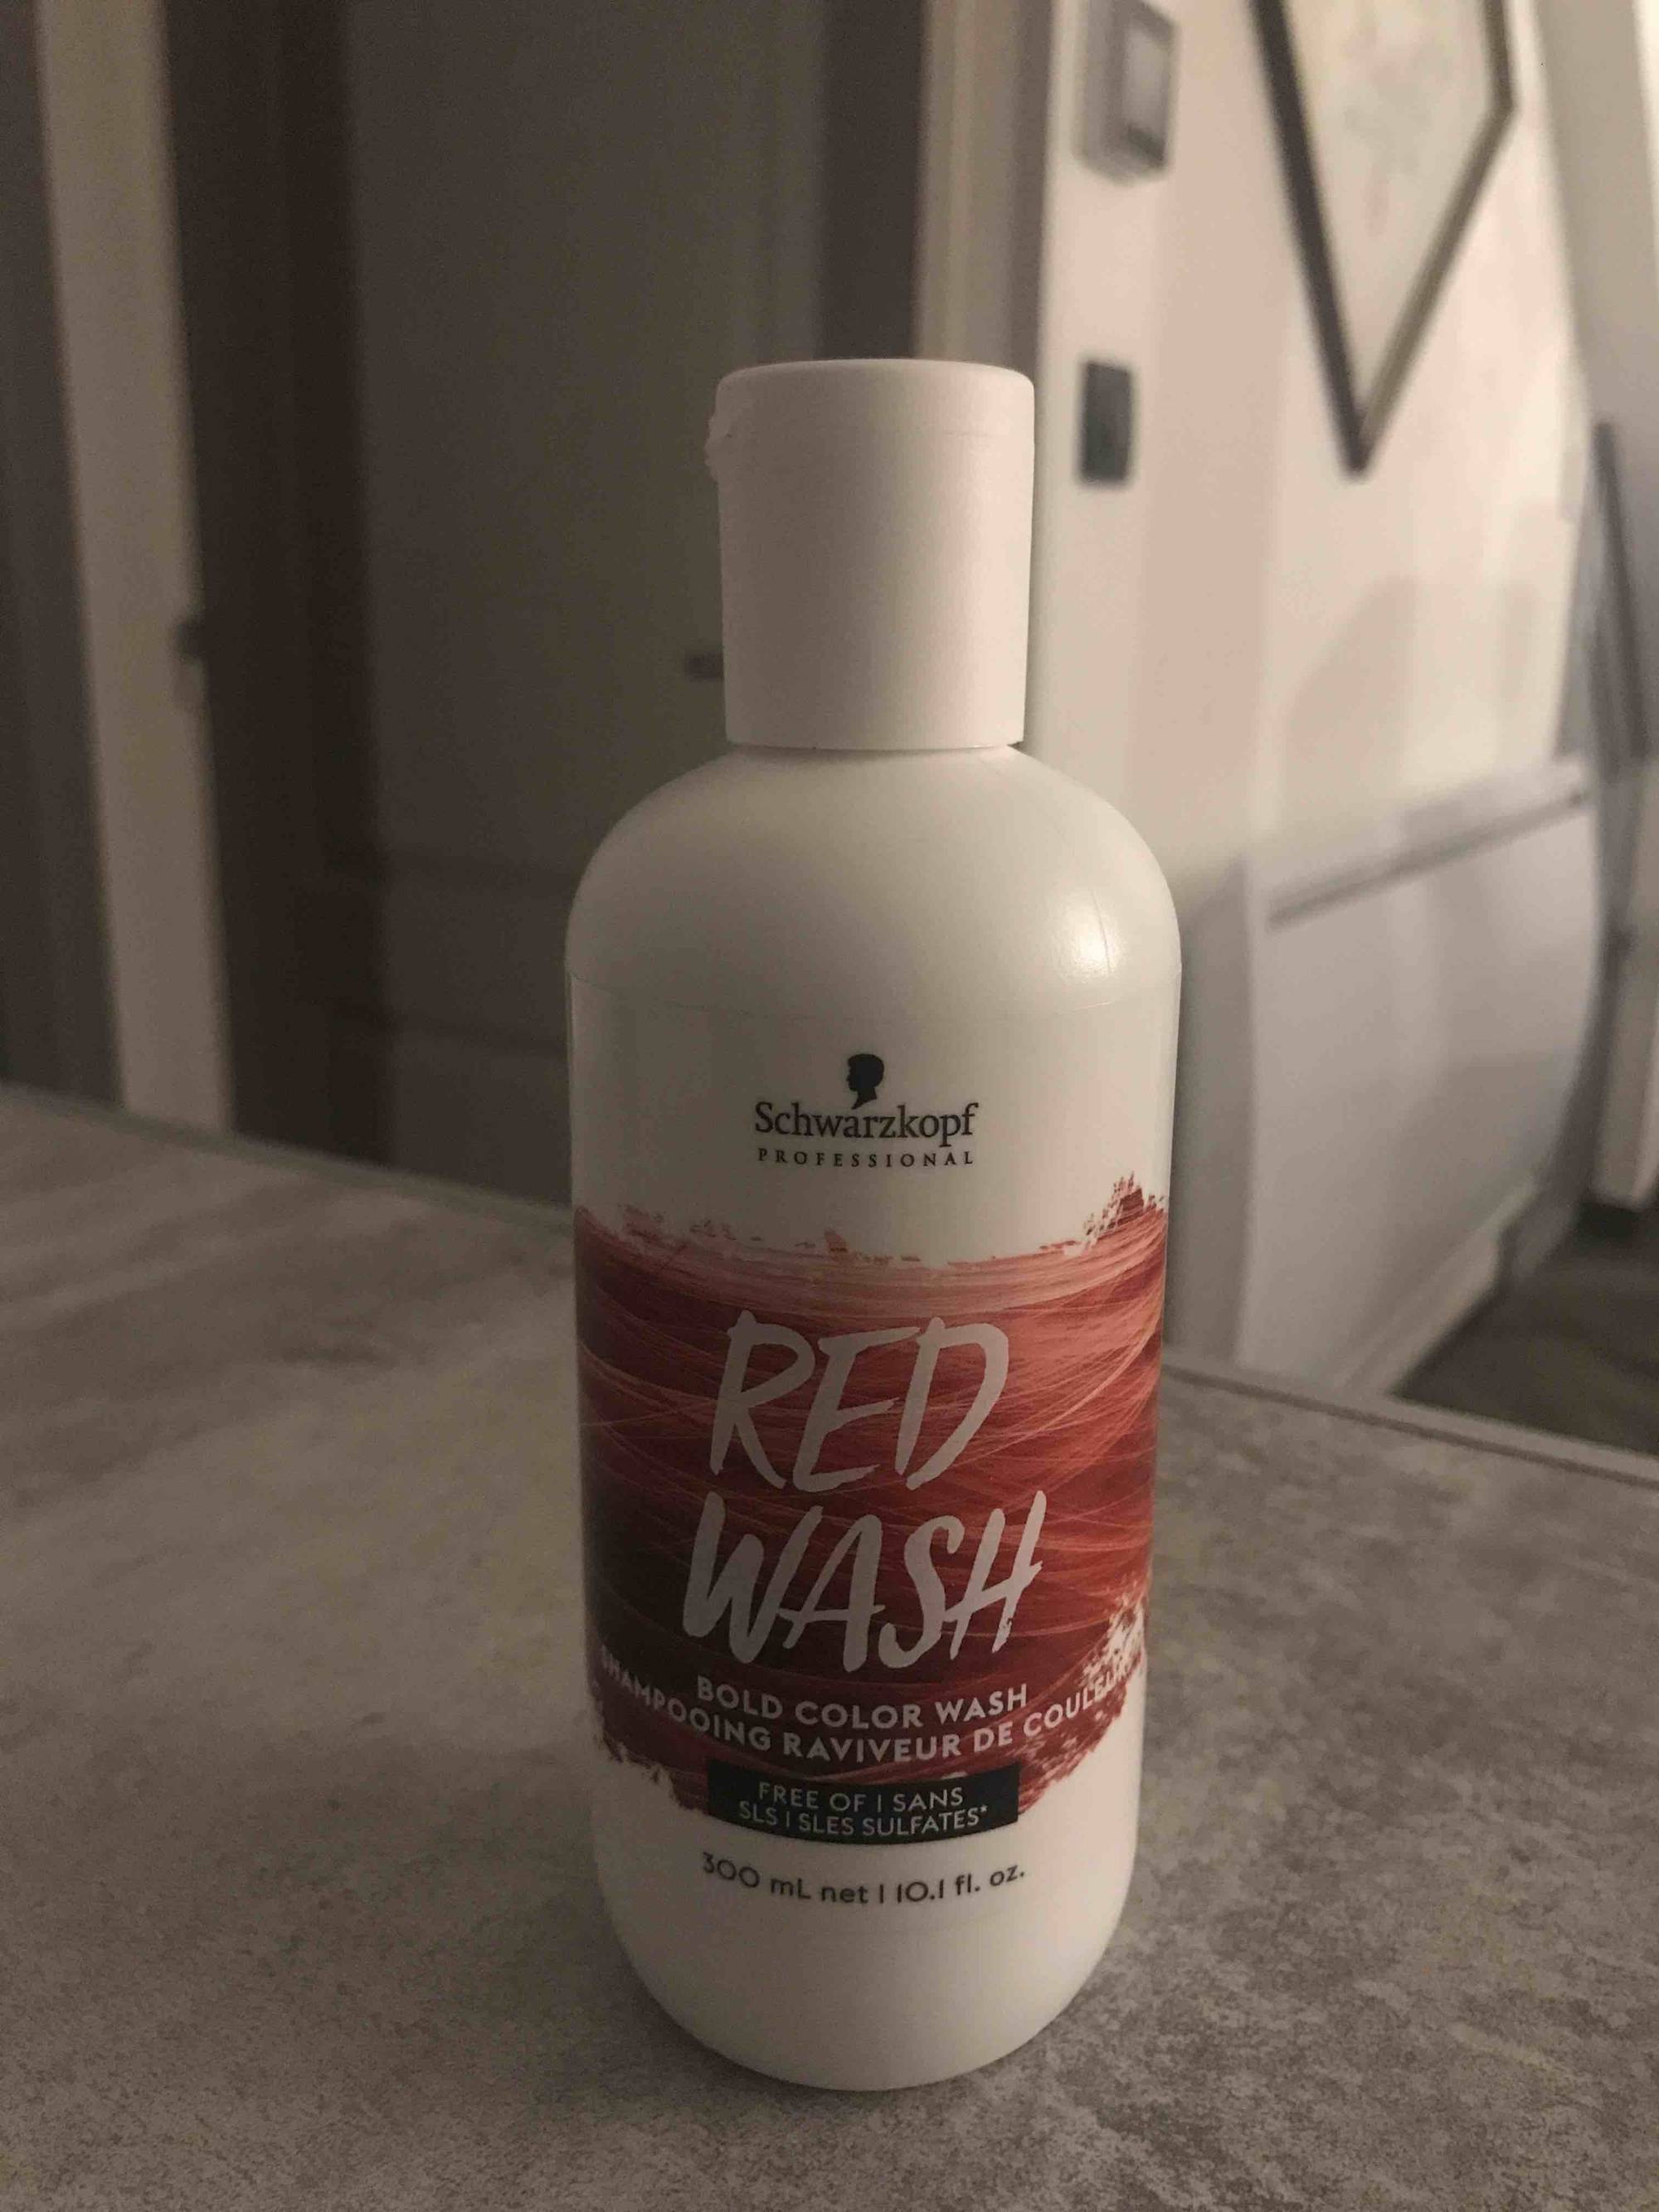 SCHWARZKOPF - Red wash - Shampooing raviveur de couleur